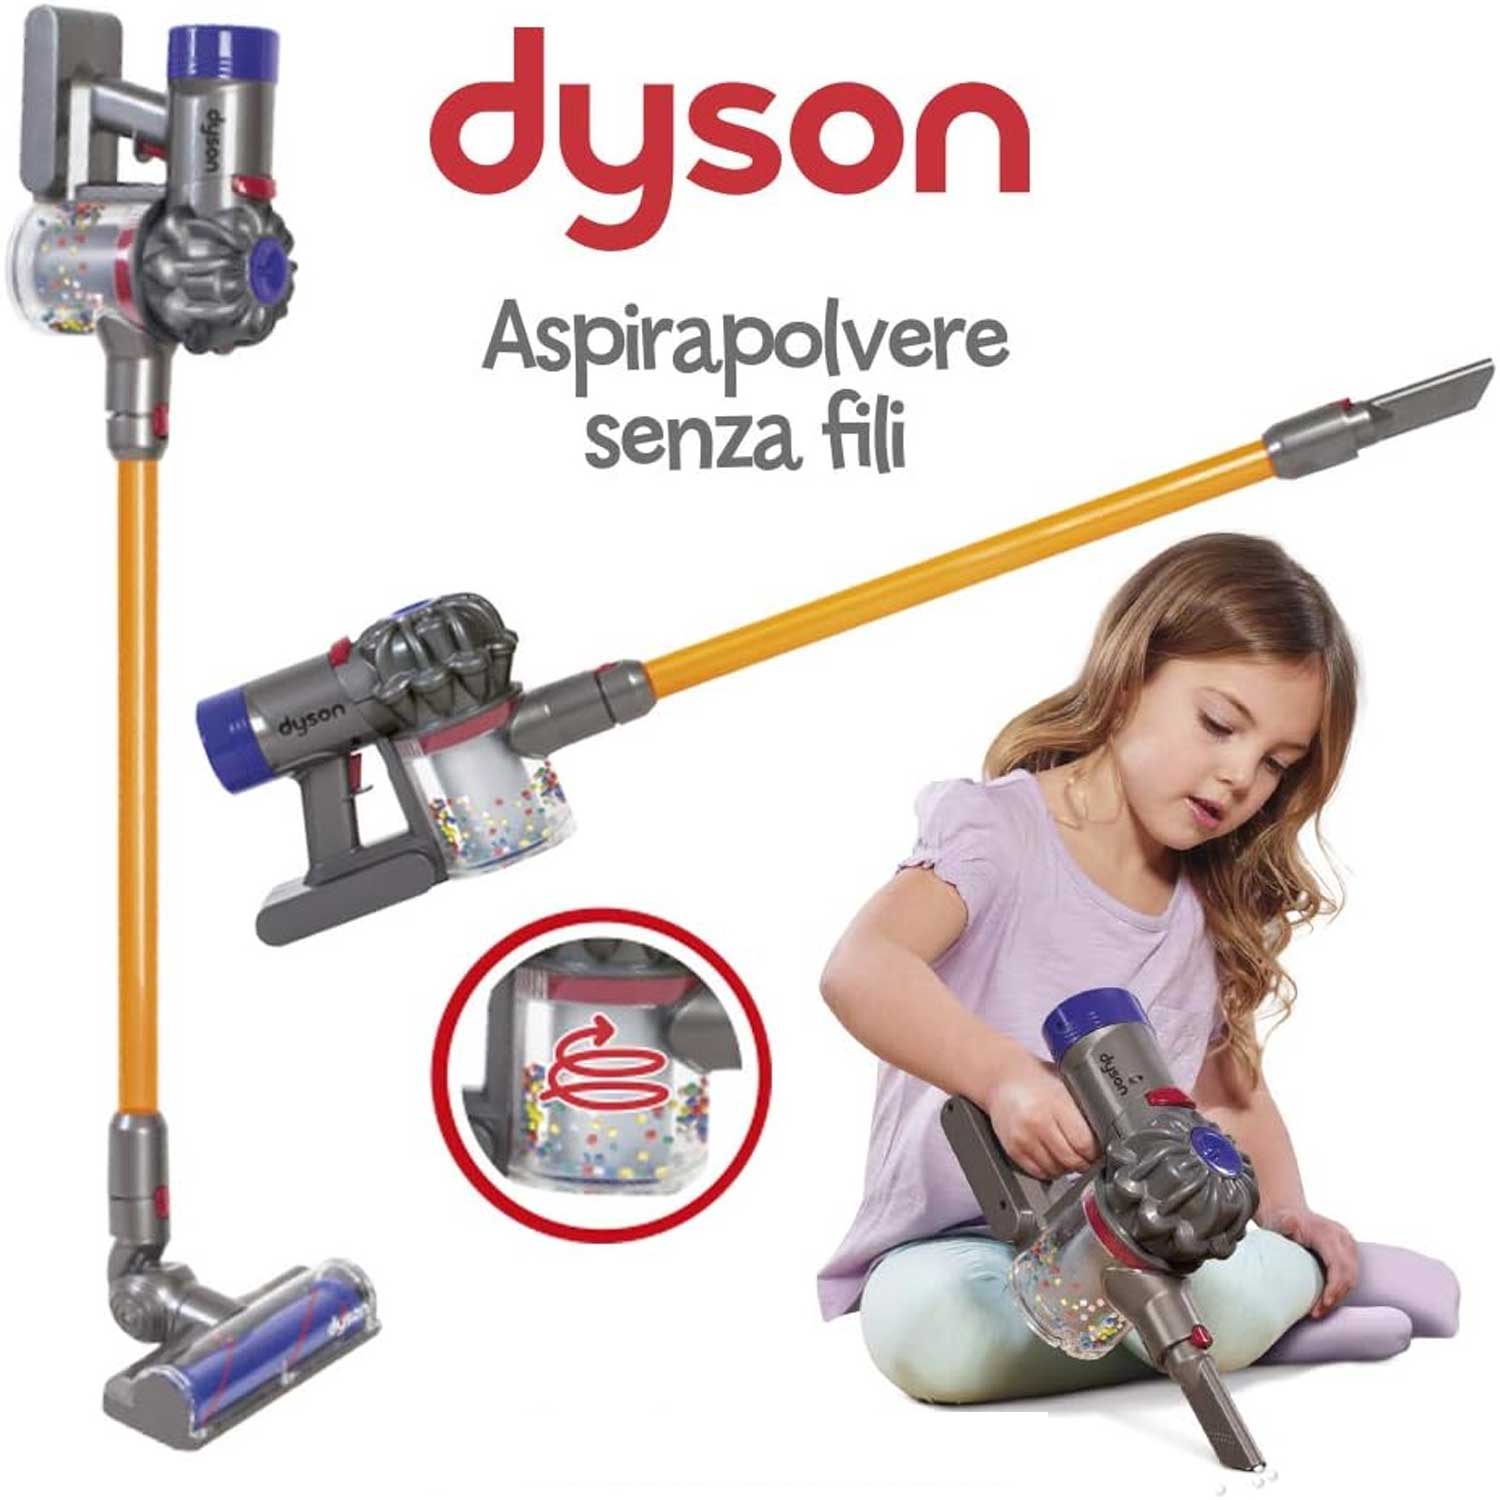 ODS Toys - Dyson Aspirapolvere Senza Filo – Iperbimbo